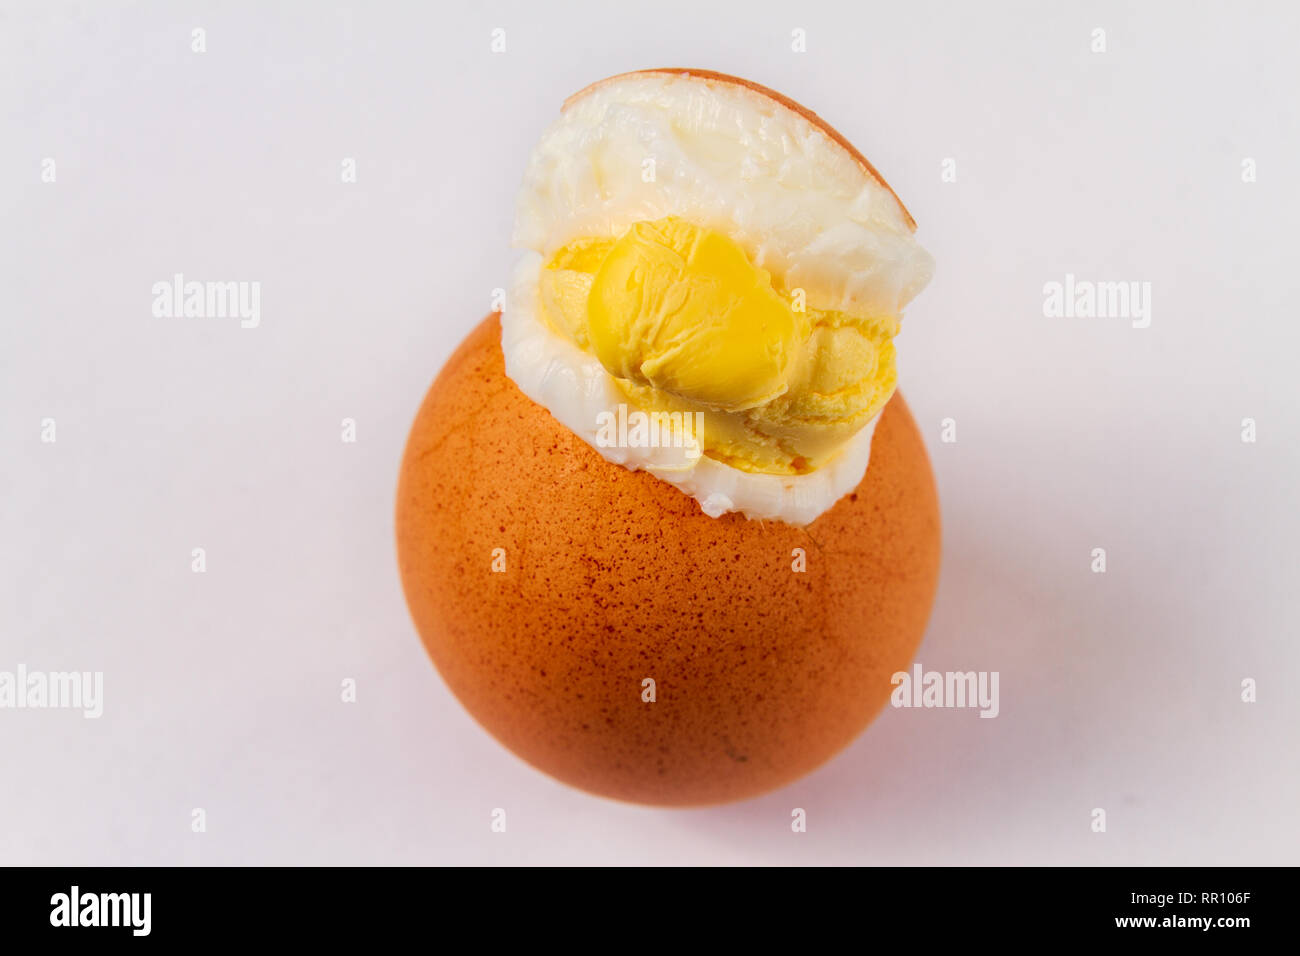 Cracked exploded egg with yoke showing isolated on a white background Stock Photo